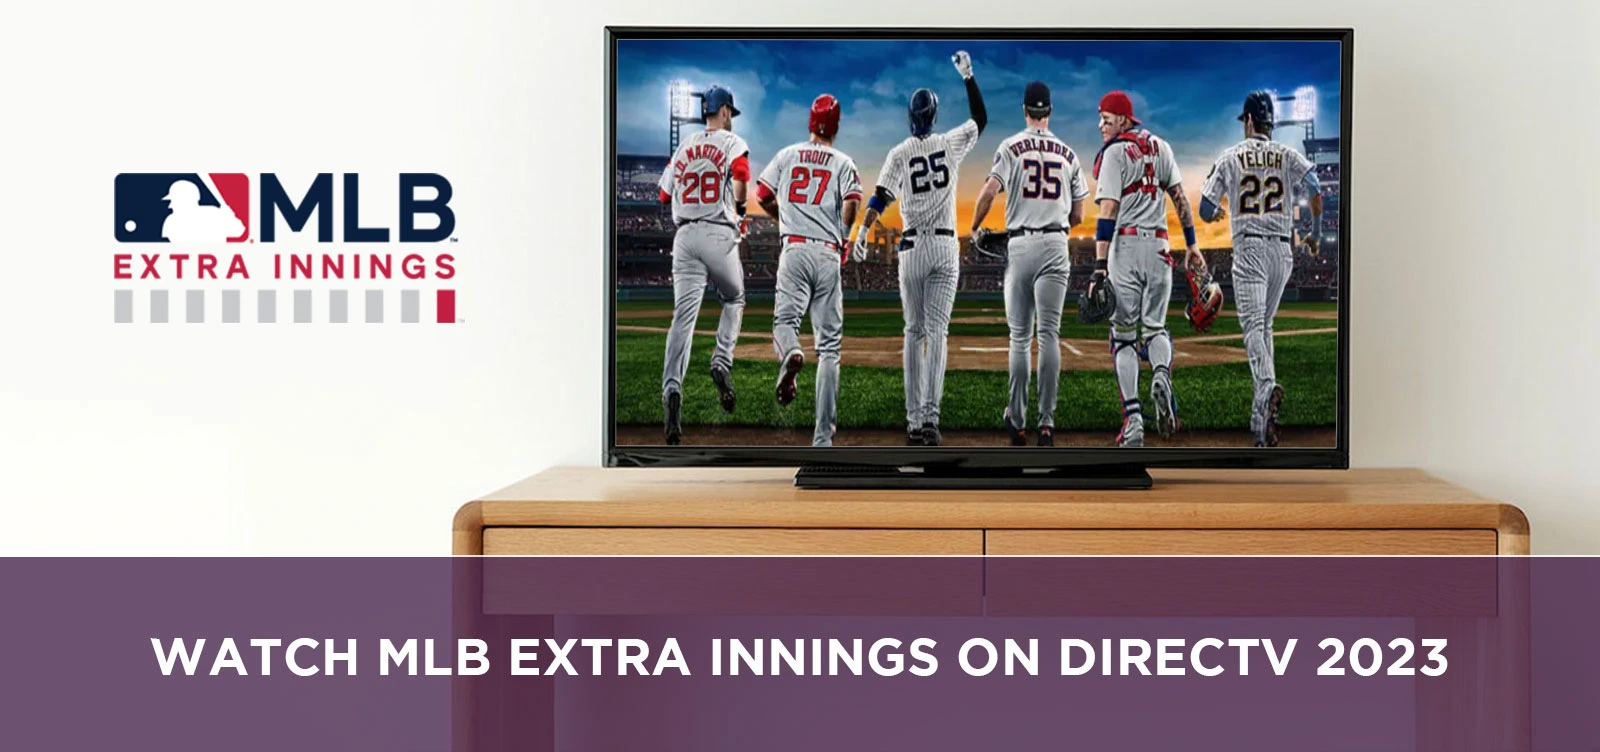 Watch MLB extra innings on DIRECTV 2023